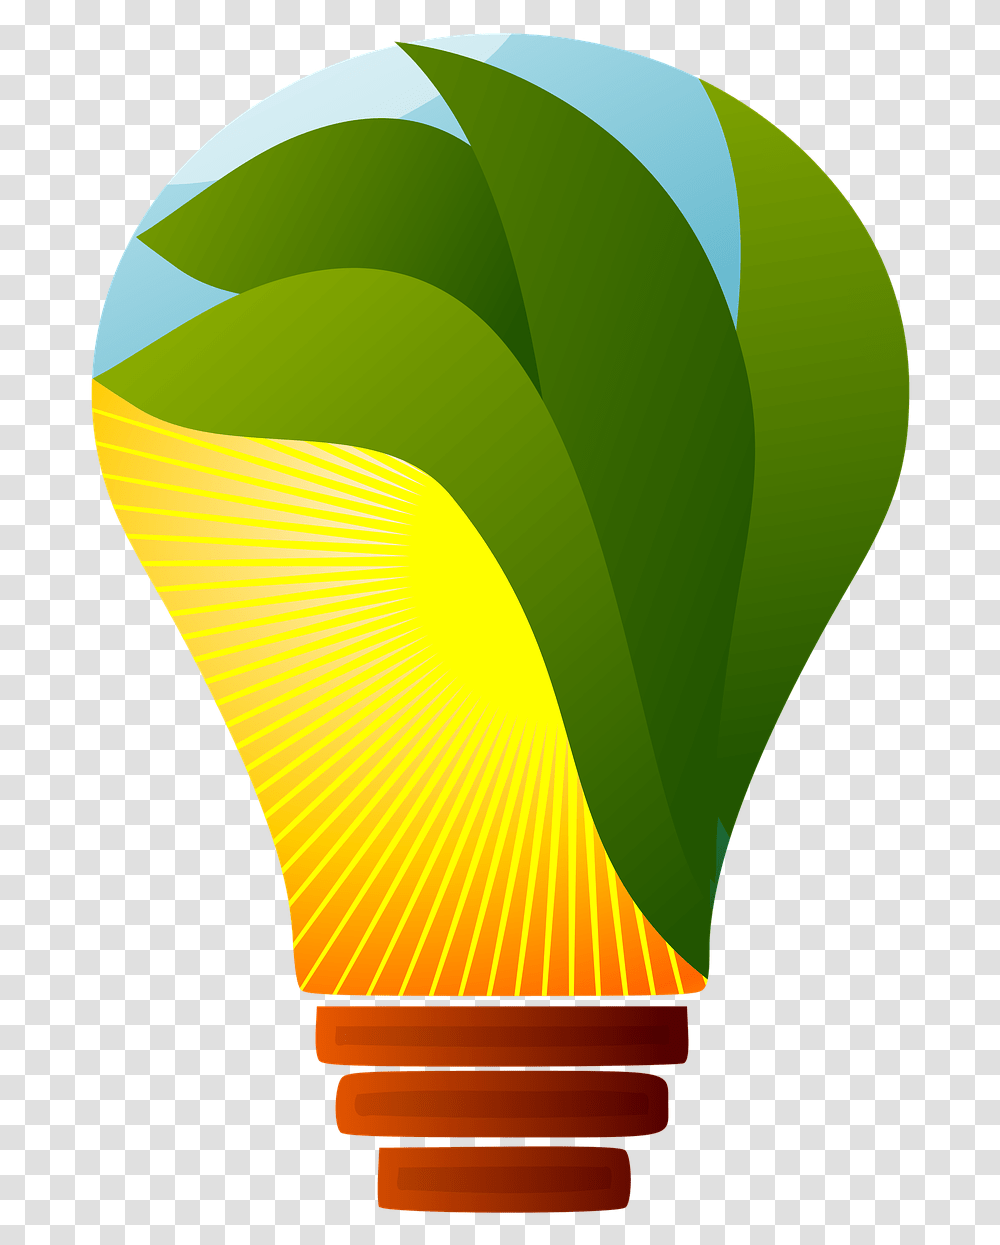 Lamp Energy Light Free Image On Pixabay Meghdoot Cinema, Plant, Graphics, Art, Balloon Transparent Png